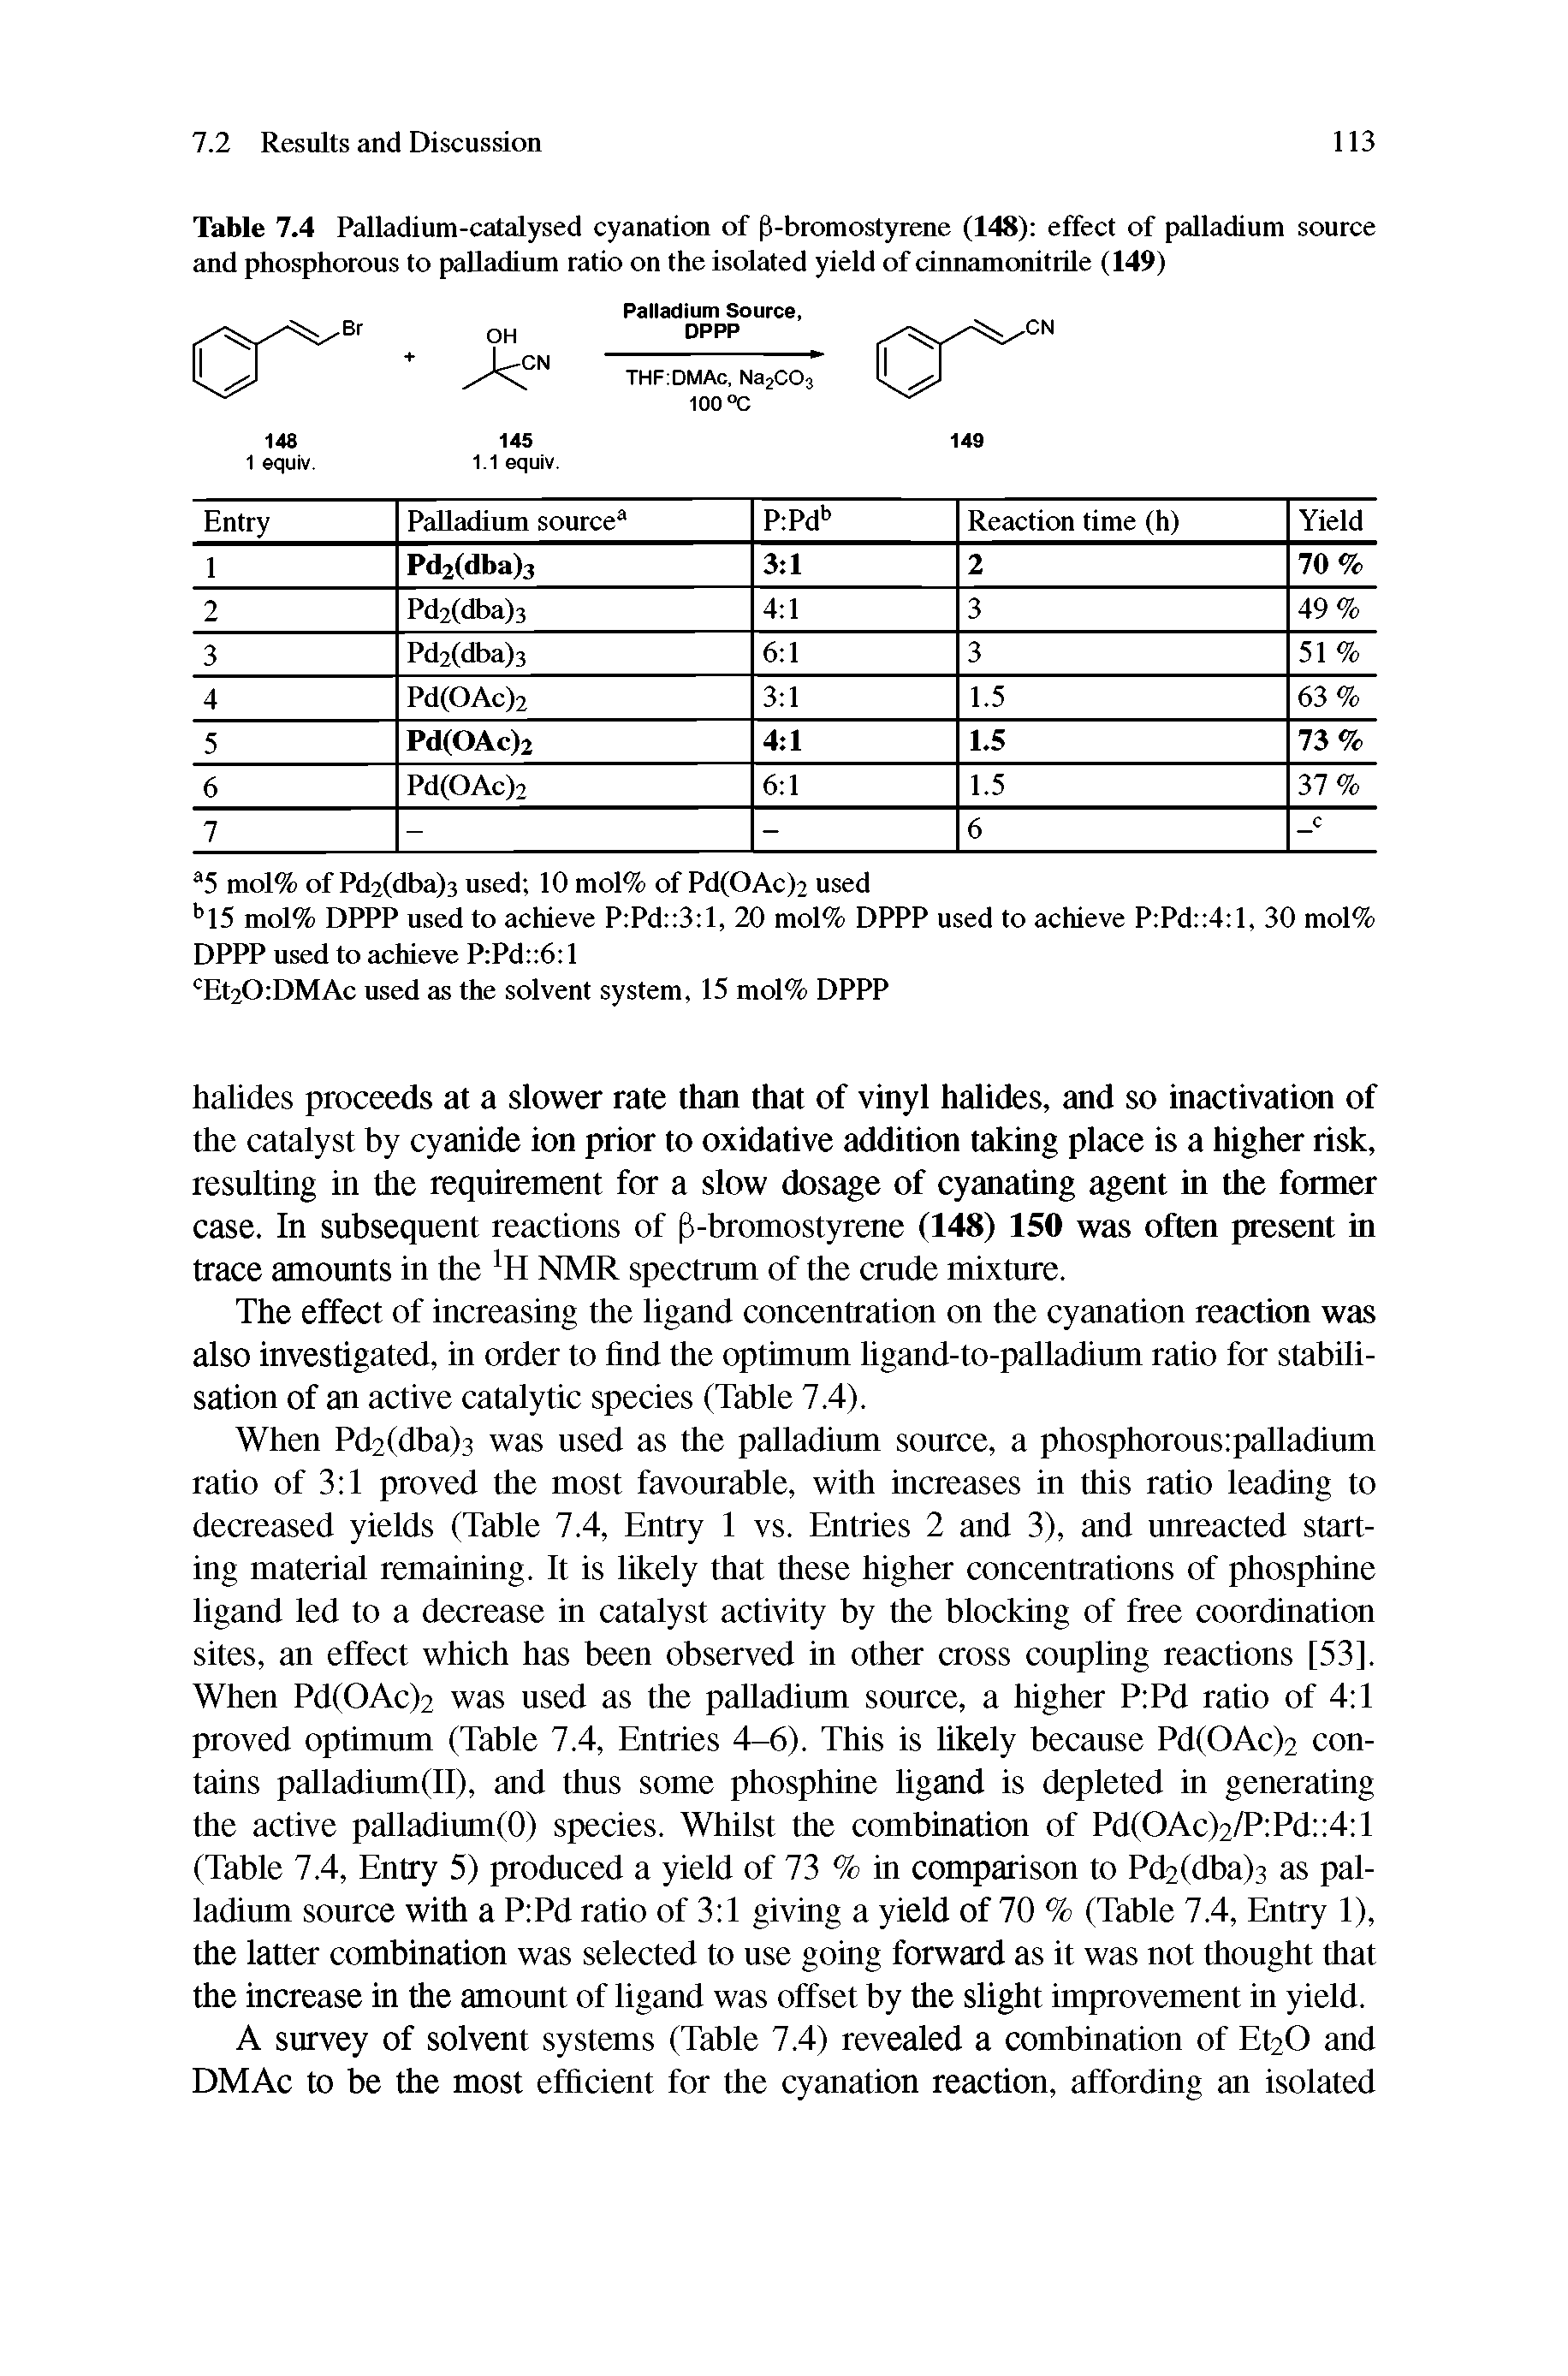 Table 7.4 Palladium-catalysed cyanation of P-bromostyrene (148) effect of palladium source and phosphorous to palladium ratio on the isolated yield of cinnamonitrile (149)...